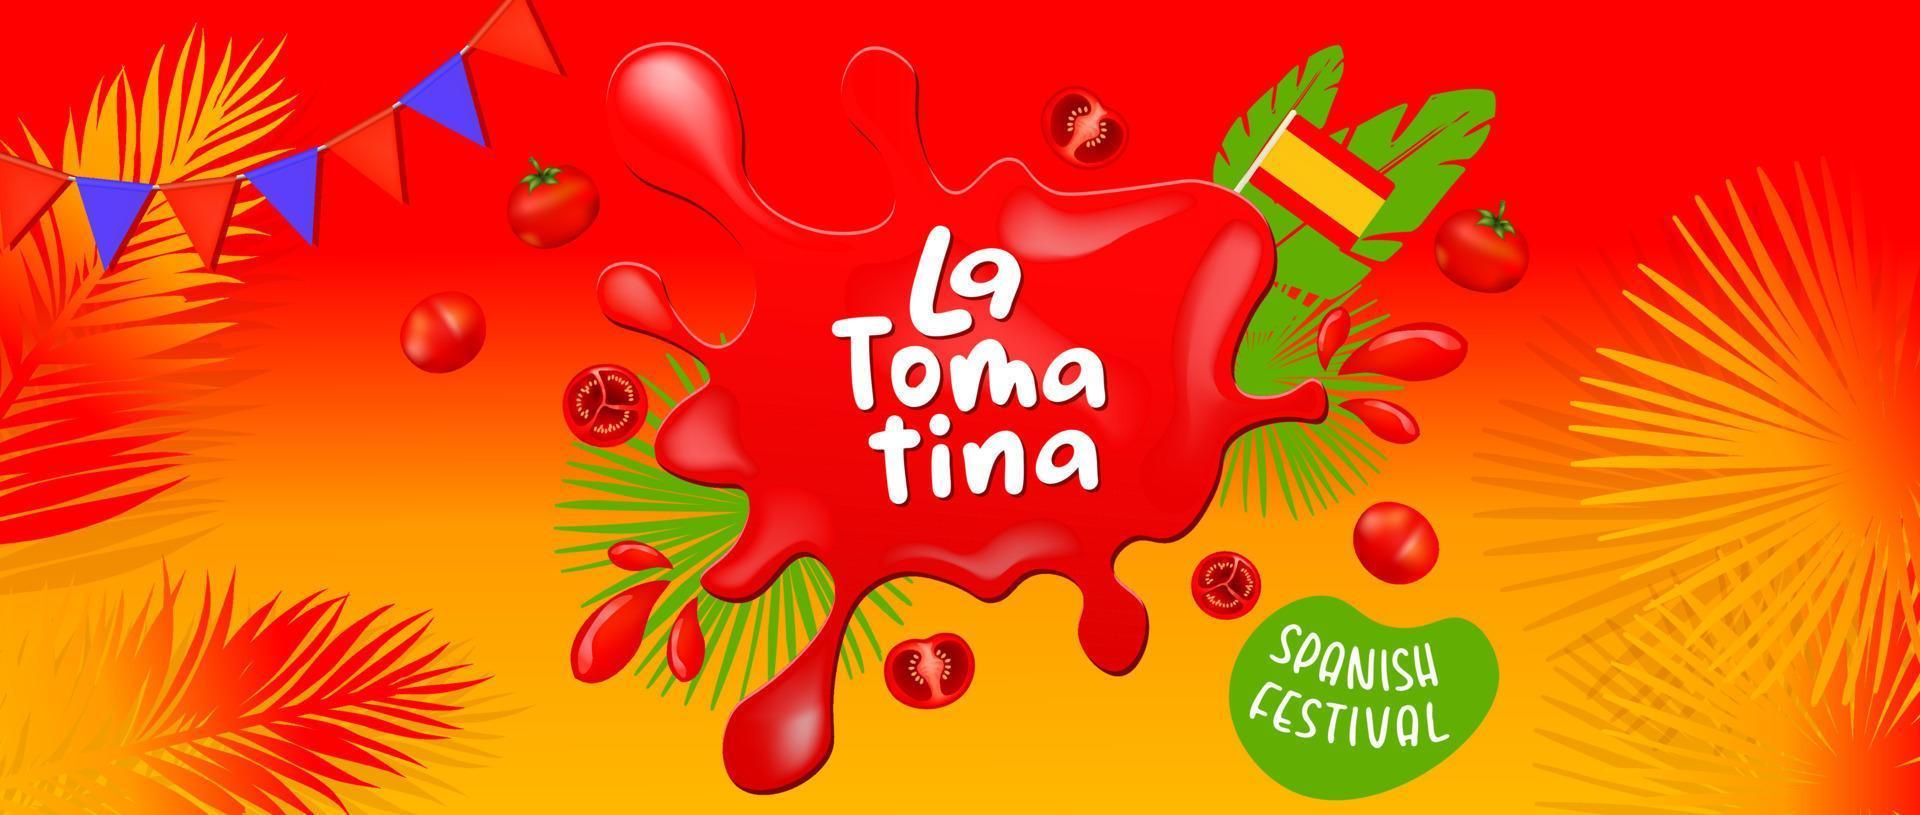 la tomatina festival bandera. la tomatina en España. tomate luchar. tomate batalla vector